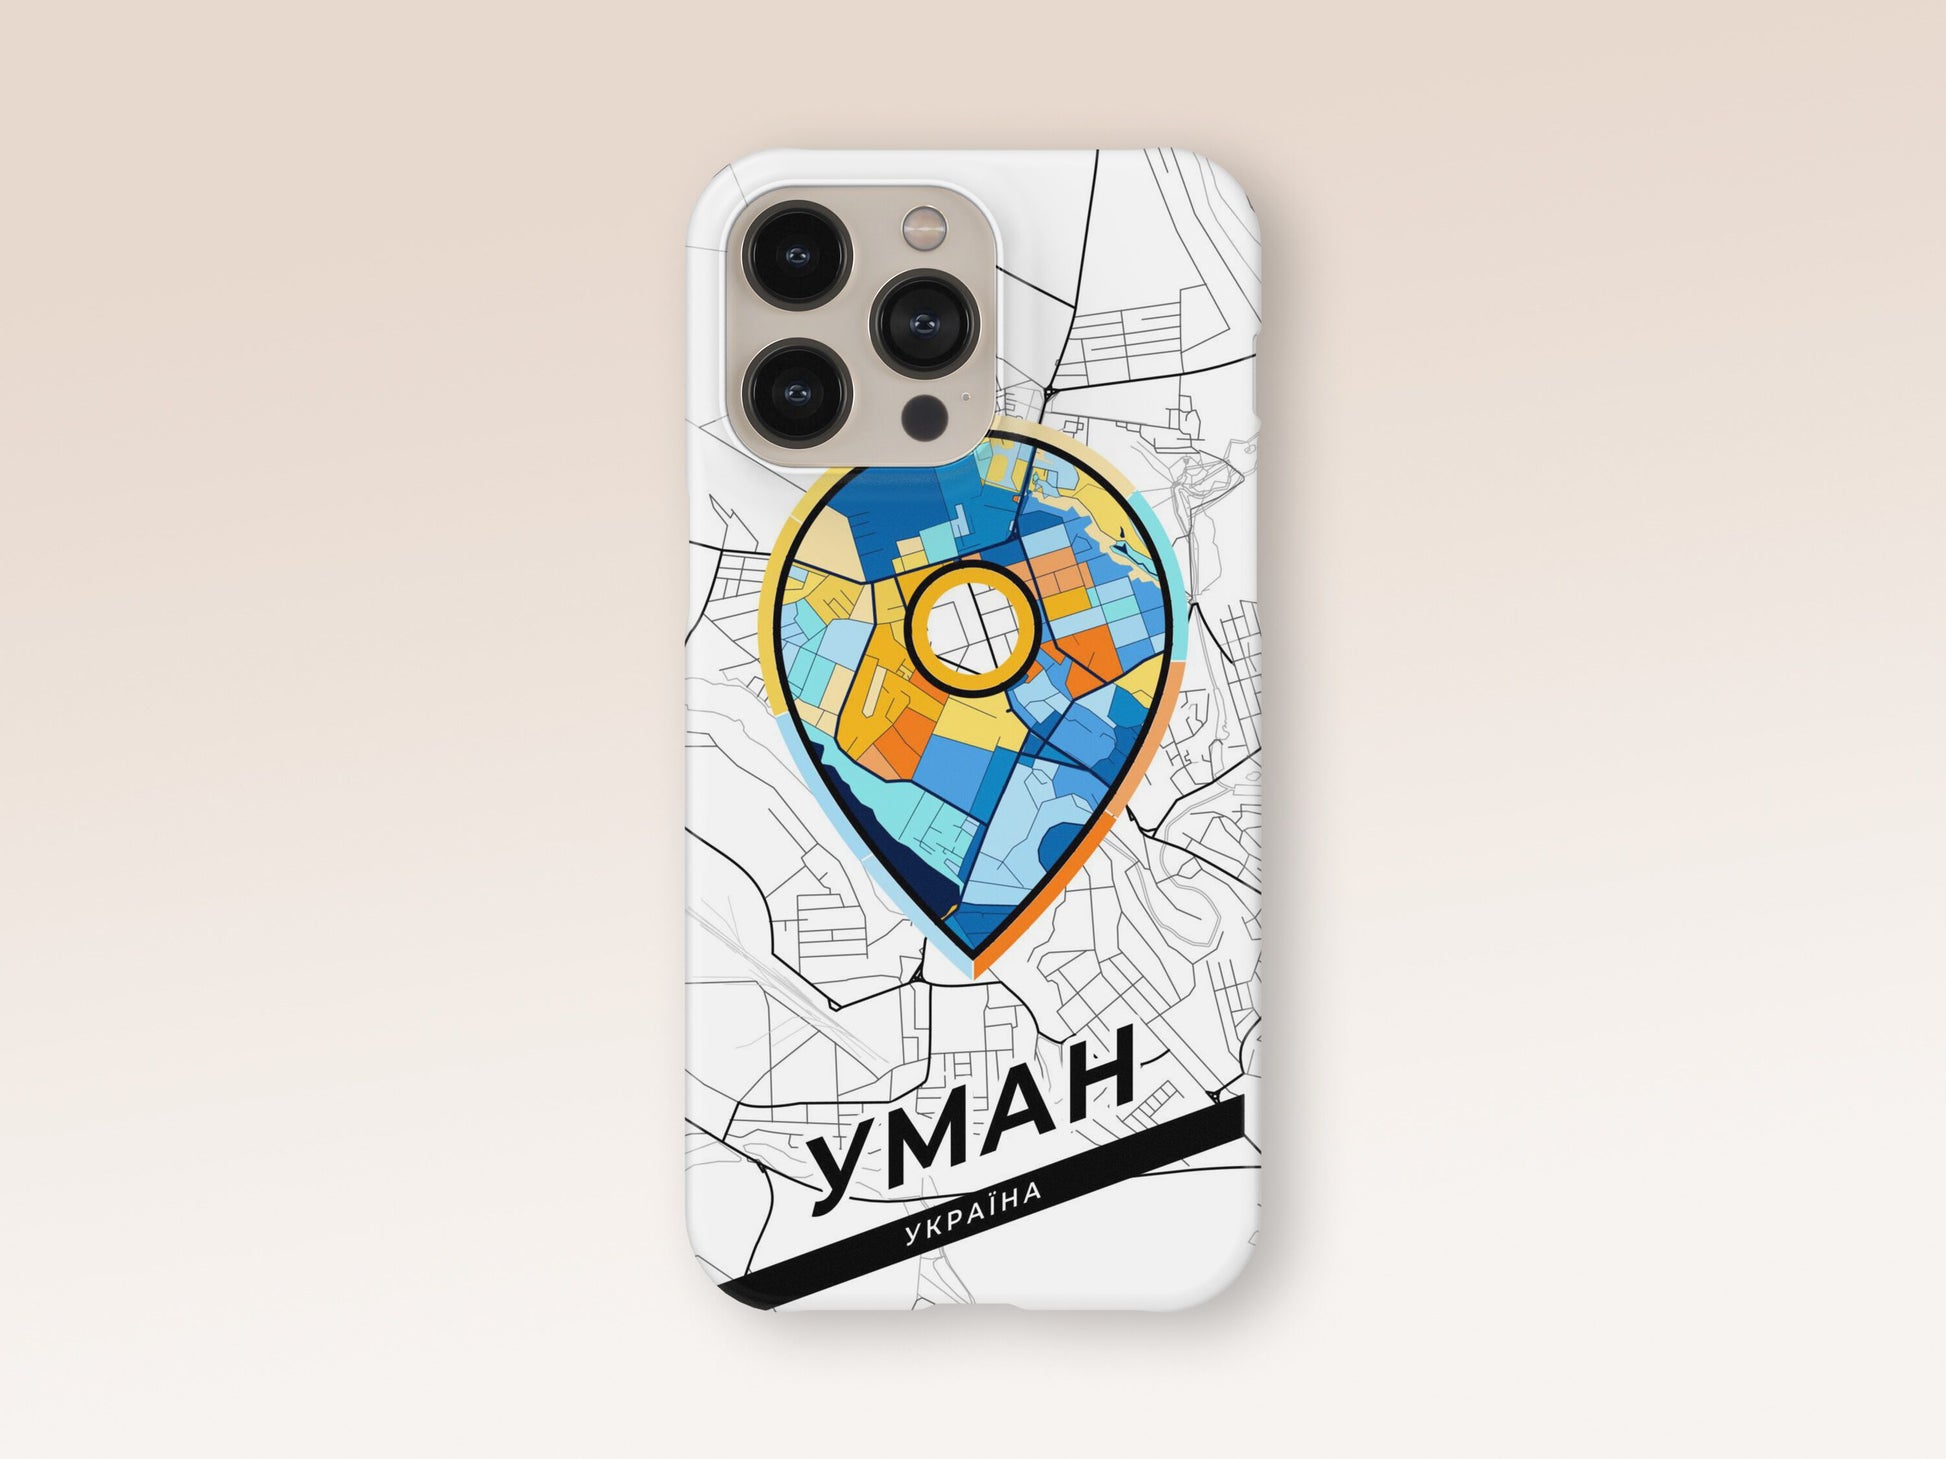 Uman Ukraine slim phone case with colorful icon 1